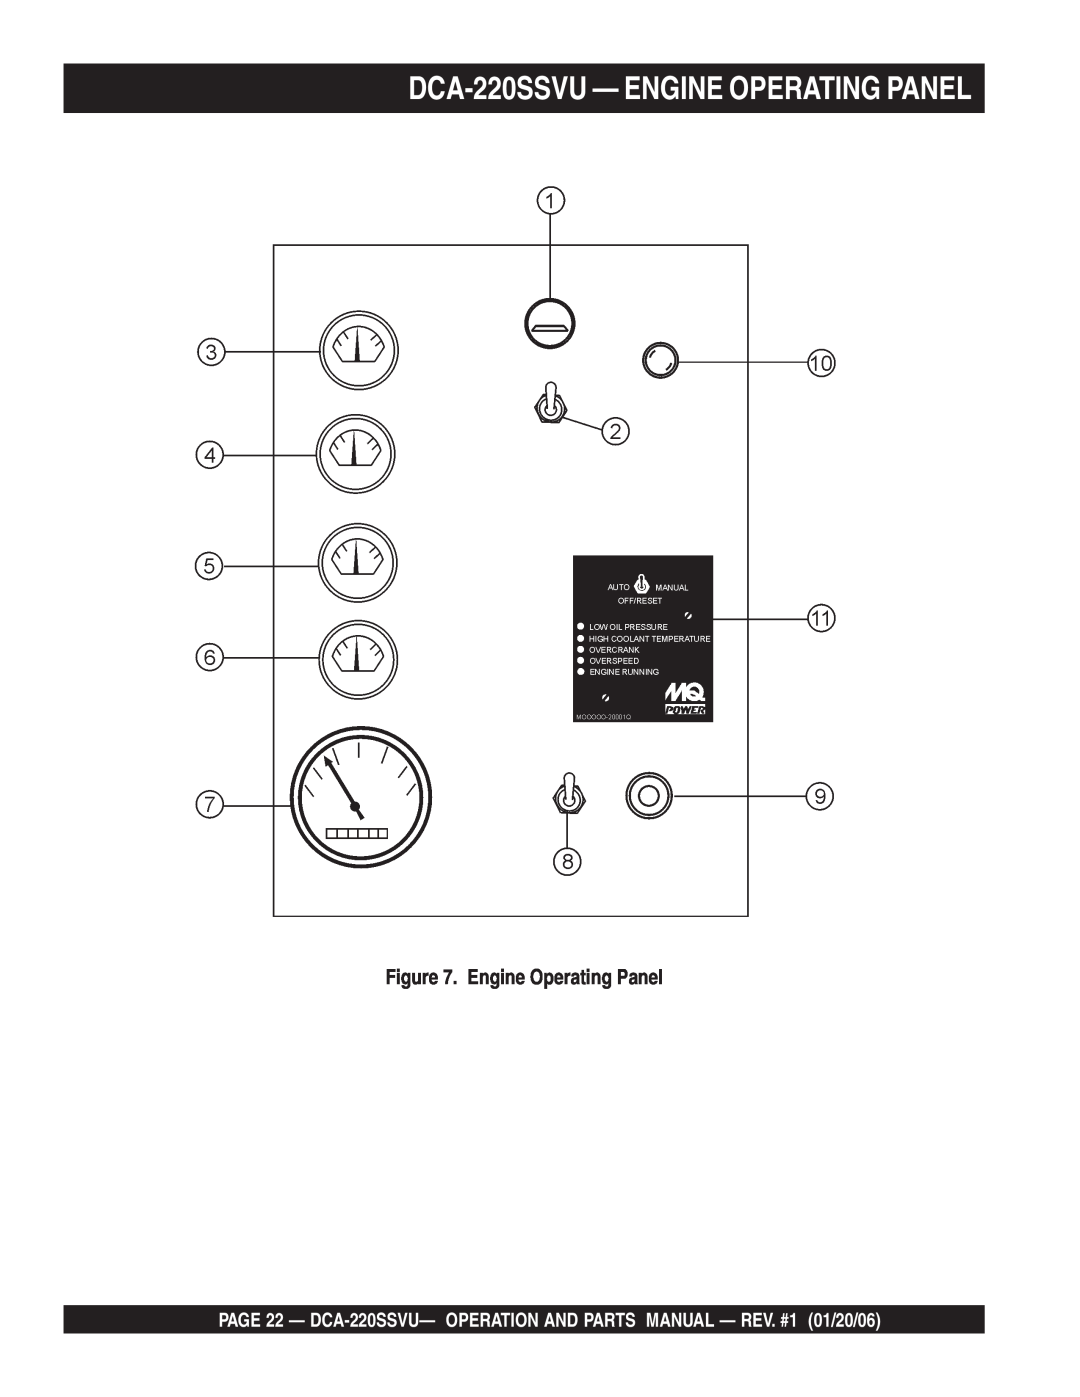 Multiquip operation manual DCA-220SSVU— ENGINE OPERATING PANEL, Engine Operating Panel 